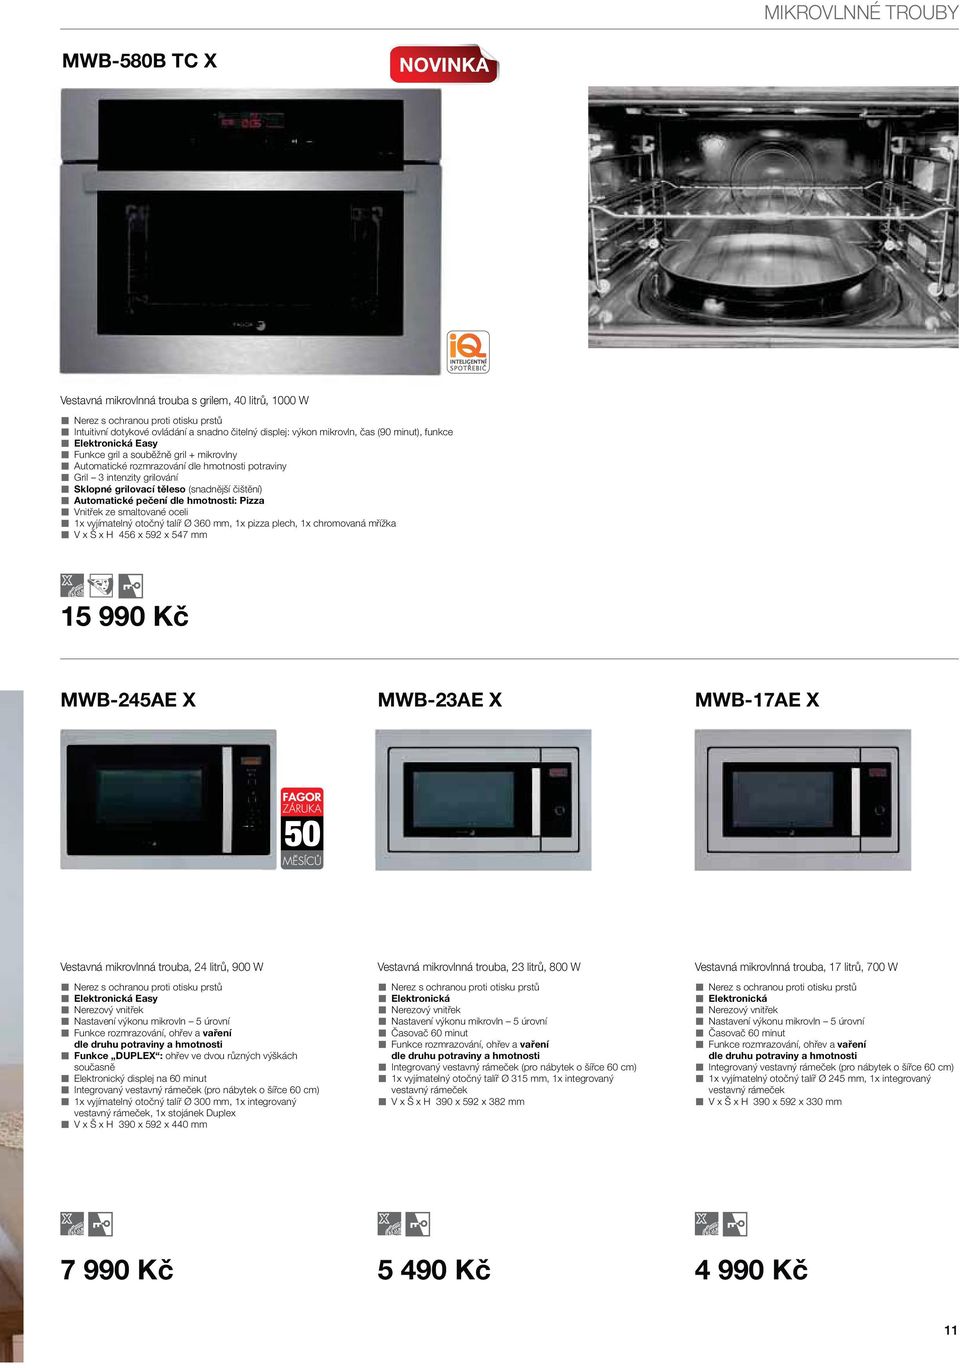 Automatické pečení dle hmotnosti: Pizza Vnitřek ze smaltované oceli 1x vyjímatelný otočný talíř Ø 360 mm, 1x pizza plech, 1x chromovaná mřížka V x Š x H 456 x 592 x 547 mm 15 990 Kč MWB-245AE X